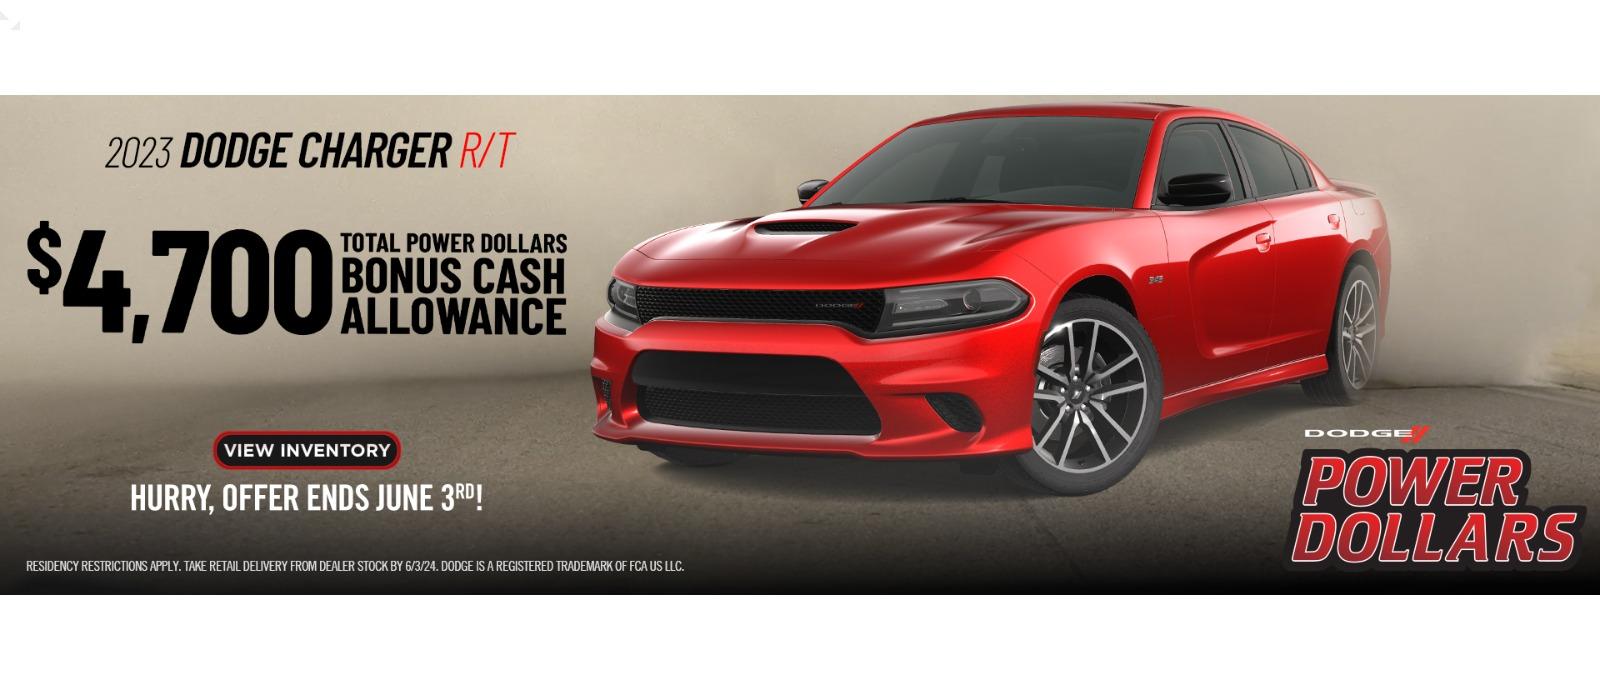 2023 Dodge Charger R/T
$4,700 Total power dollars Bonus Cash Allowance